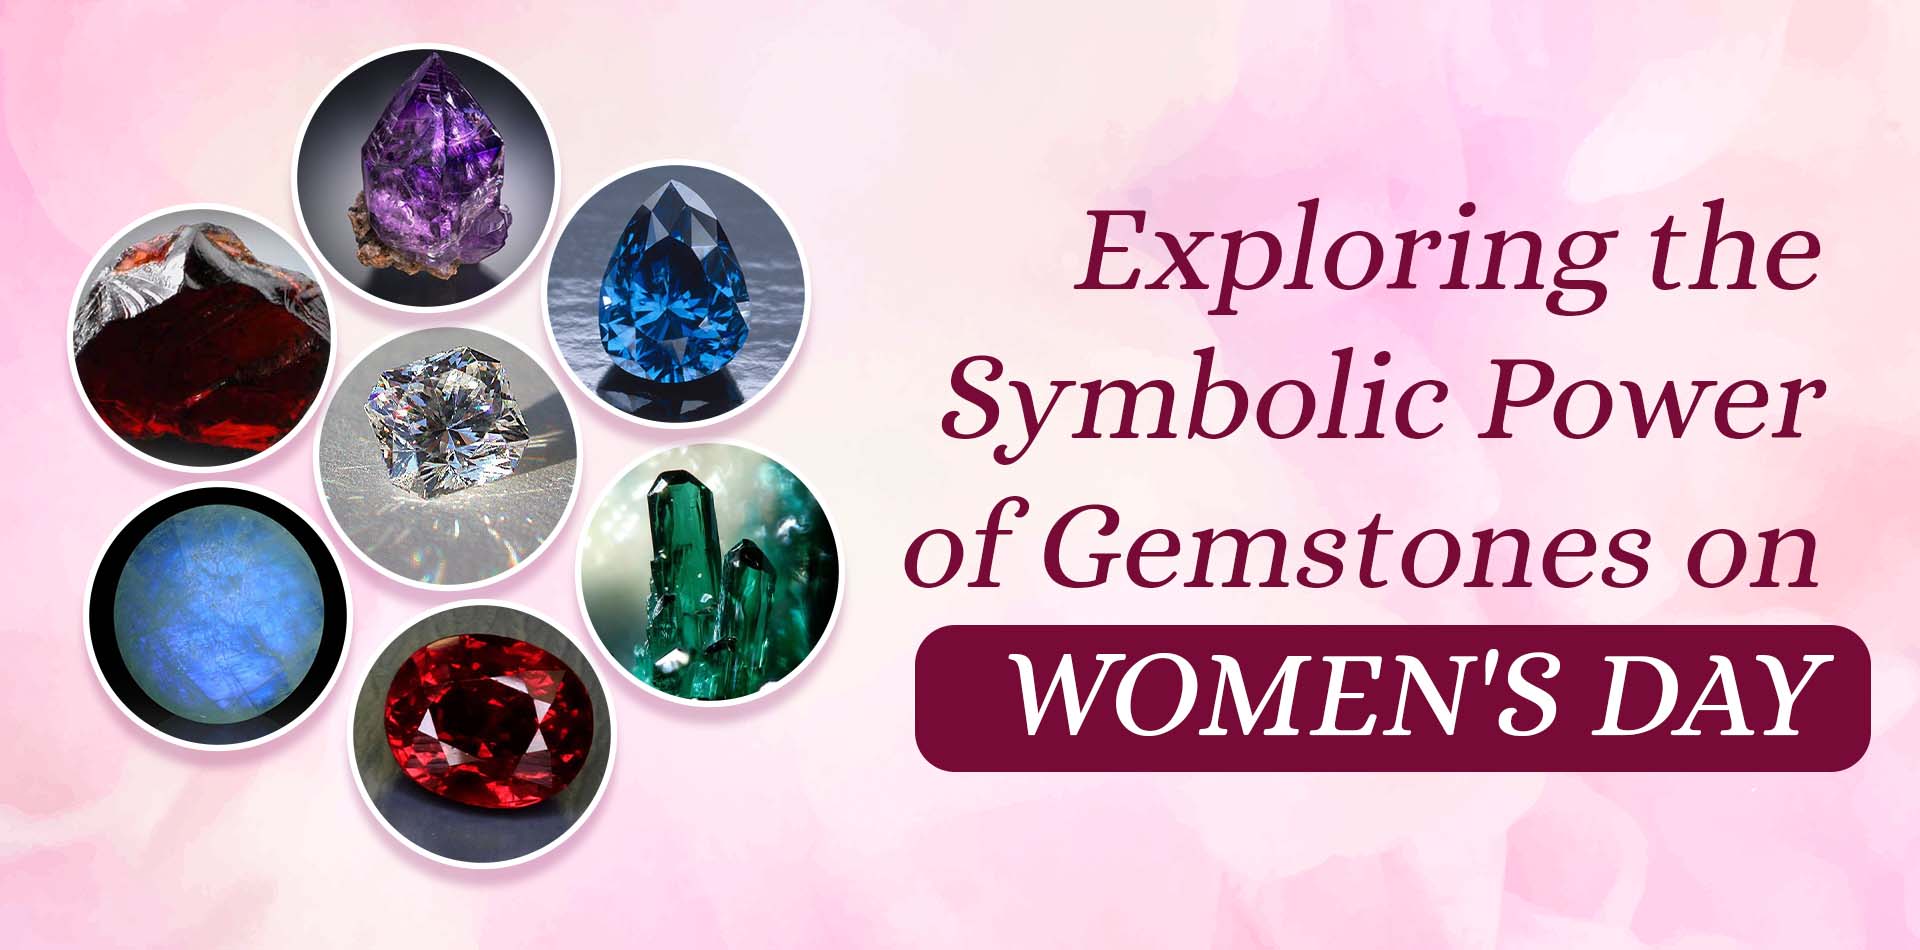 Exploring the Symbolic Power of Gemstones on Women's Day